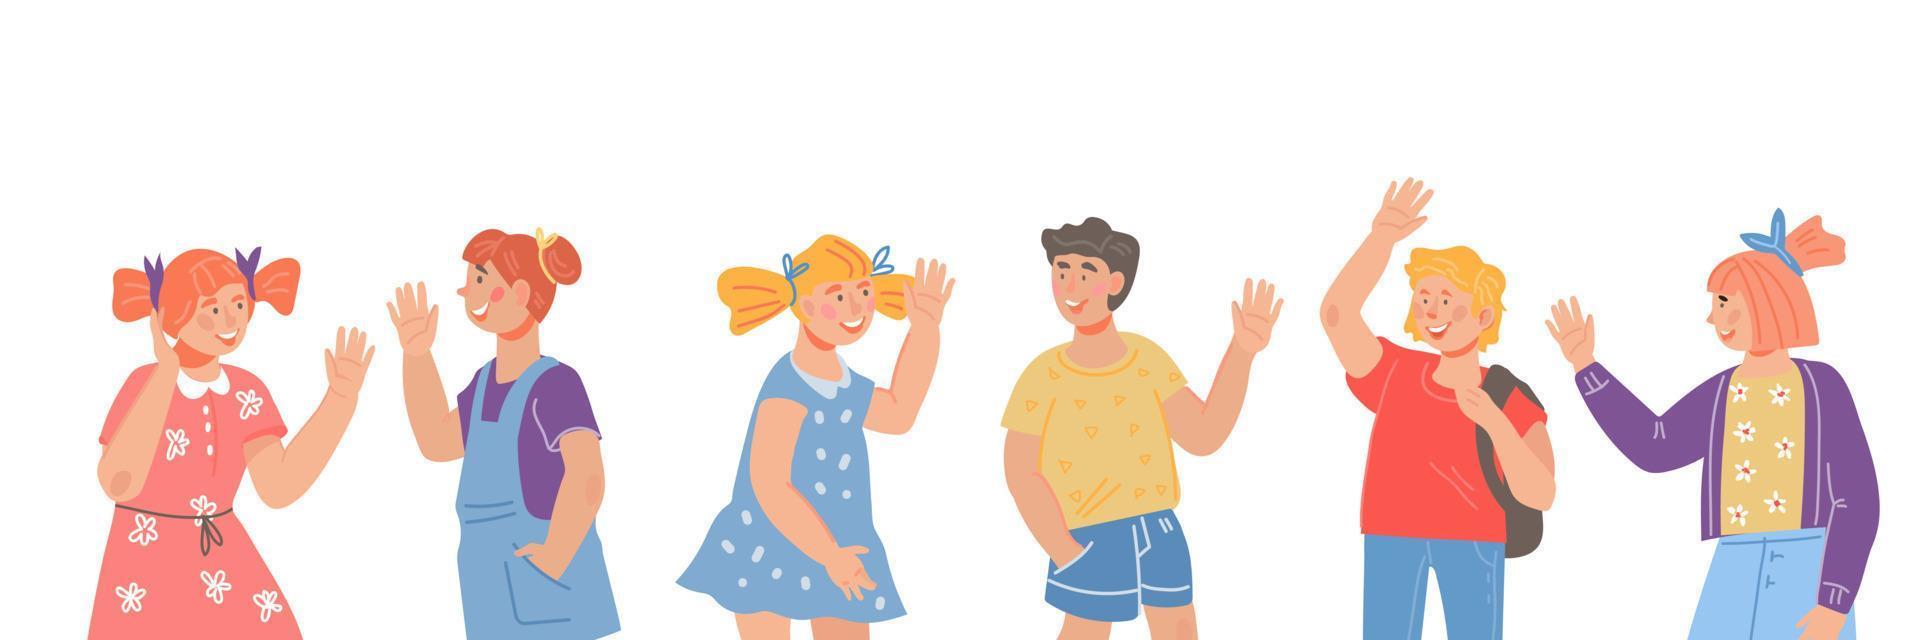 Cute children characters waving hands in greeting gesture. Childrten happy to see elementary school friends or s, kindergarten maters. Kids saying Hi vector